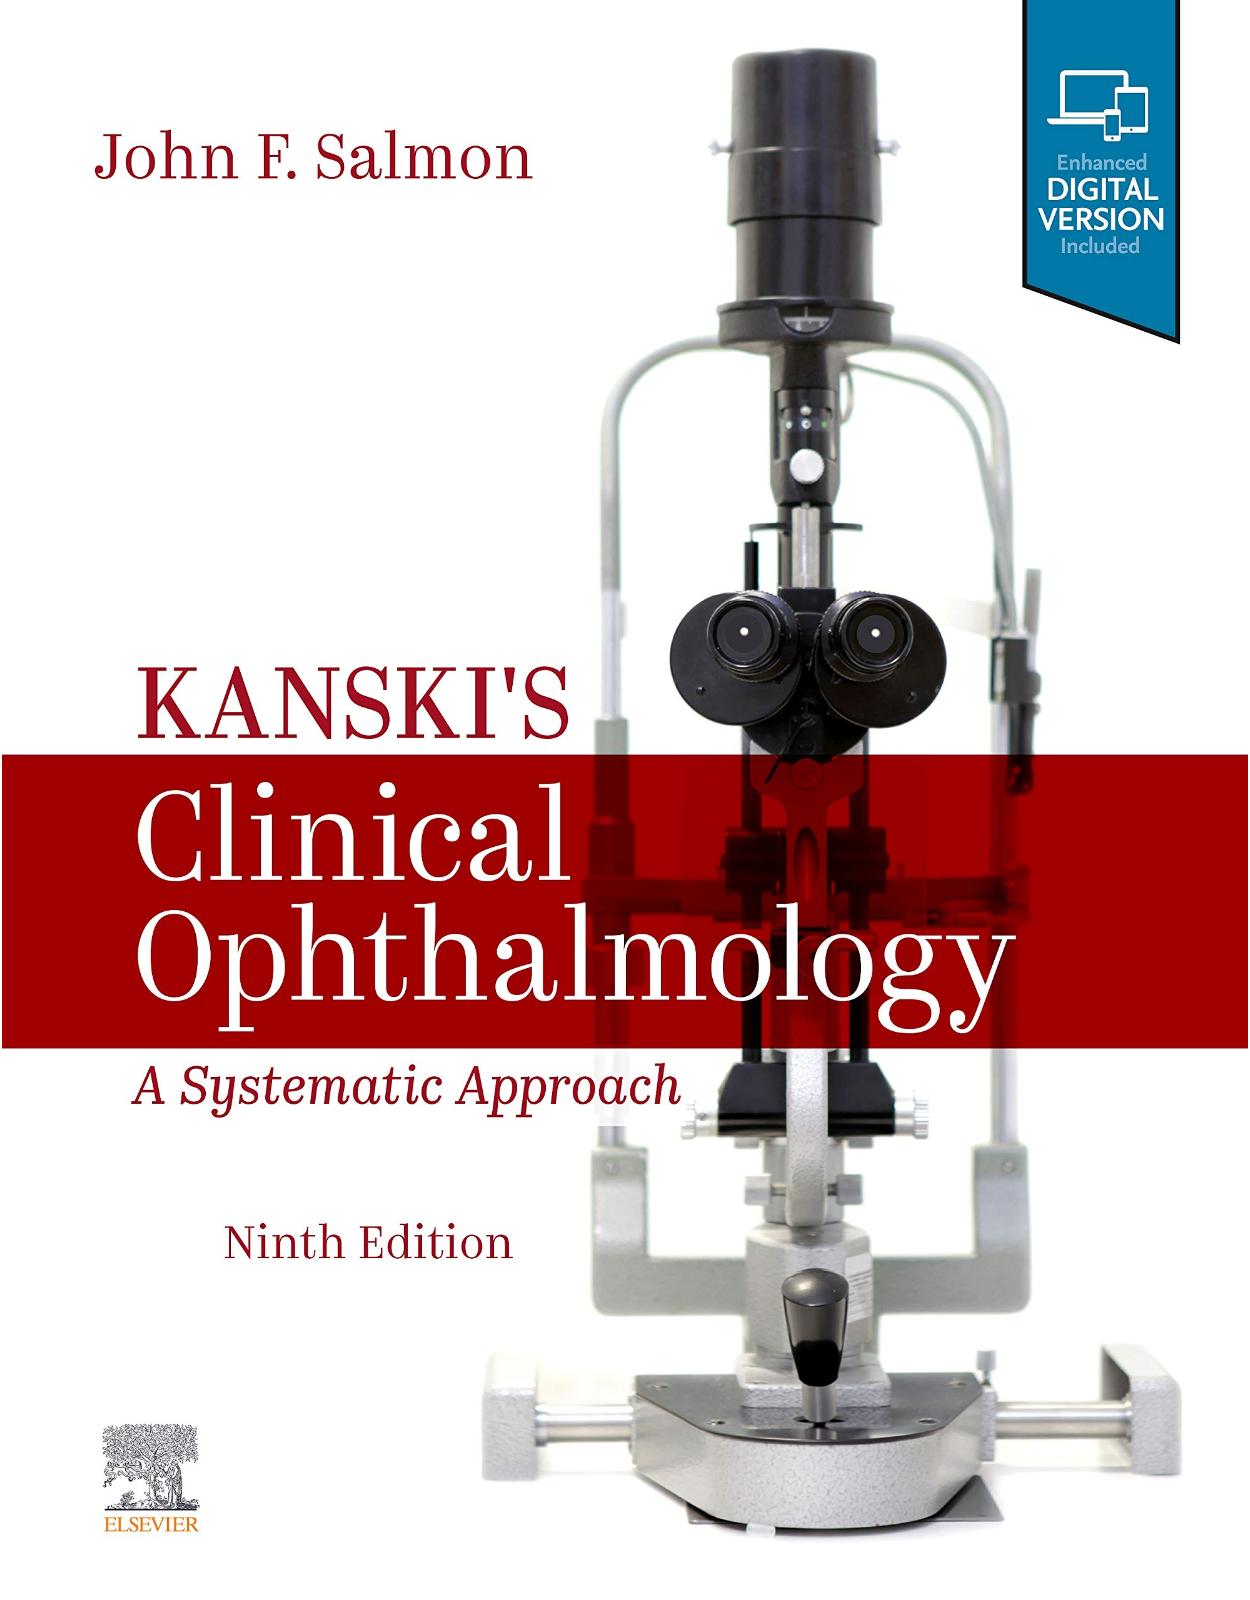 Kanski’s Clinical Ophthalmology, 9th Edition